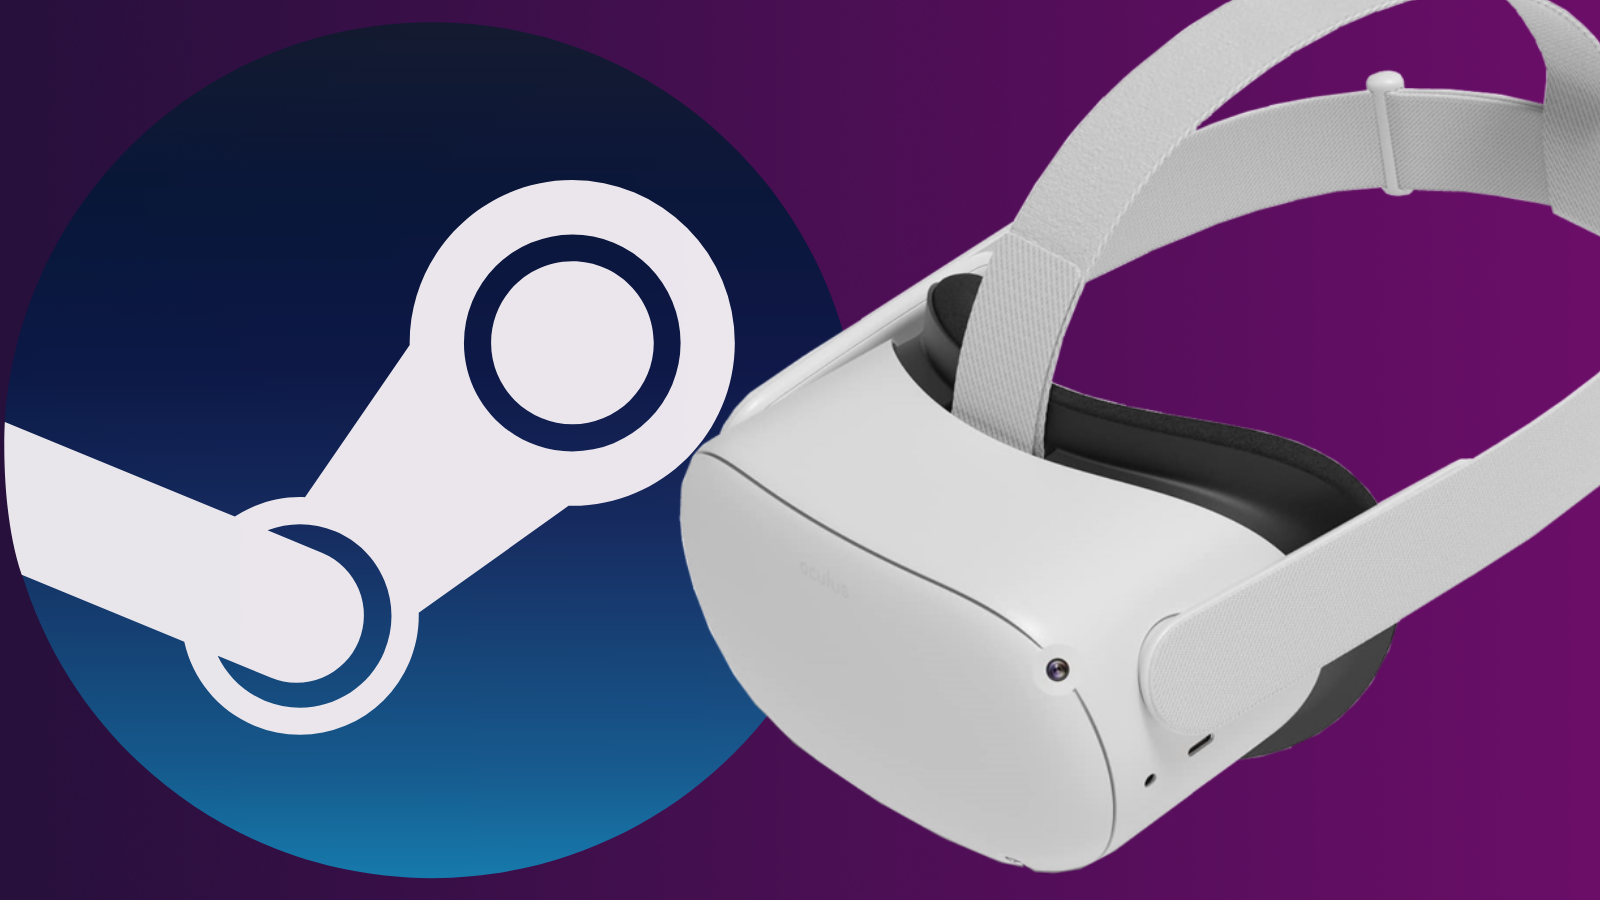 Half-Life: Alyx Works Wirelessly With Virtual Desktop On Oculus